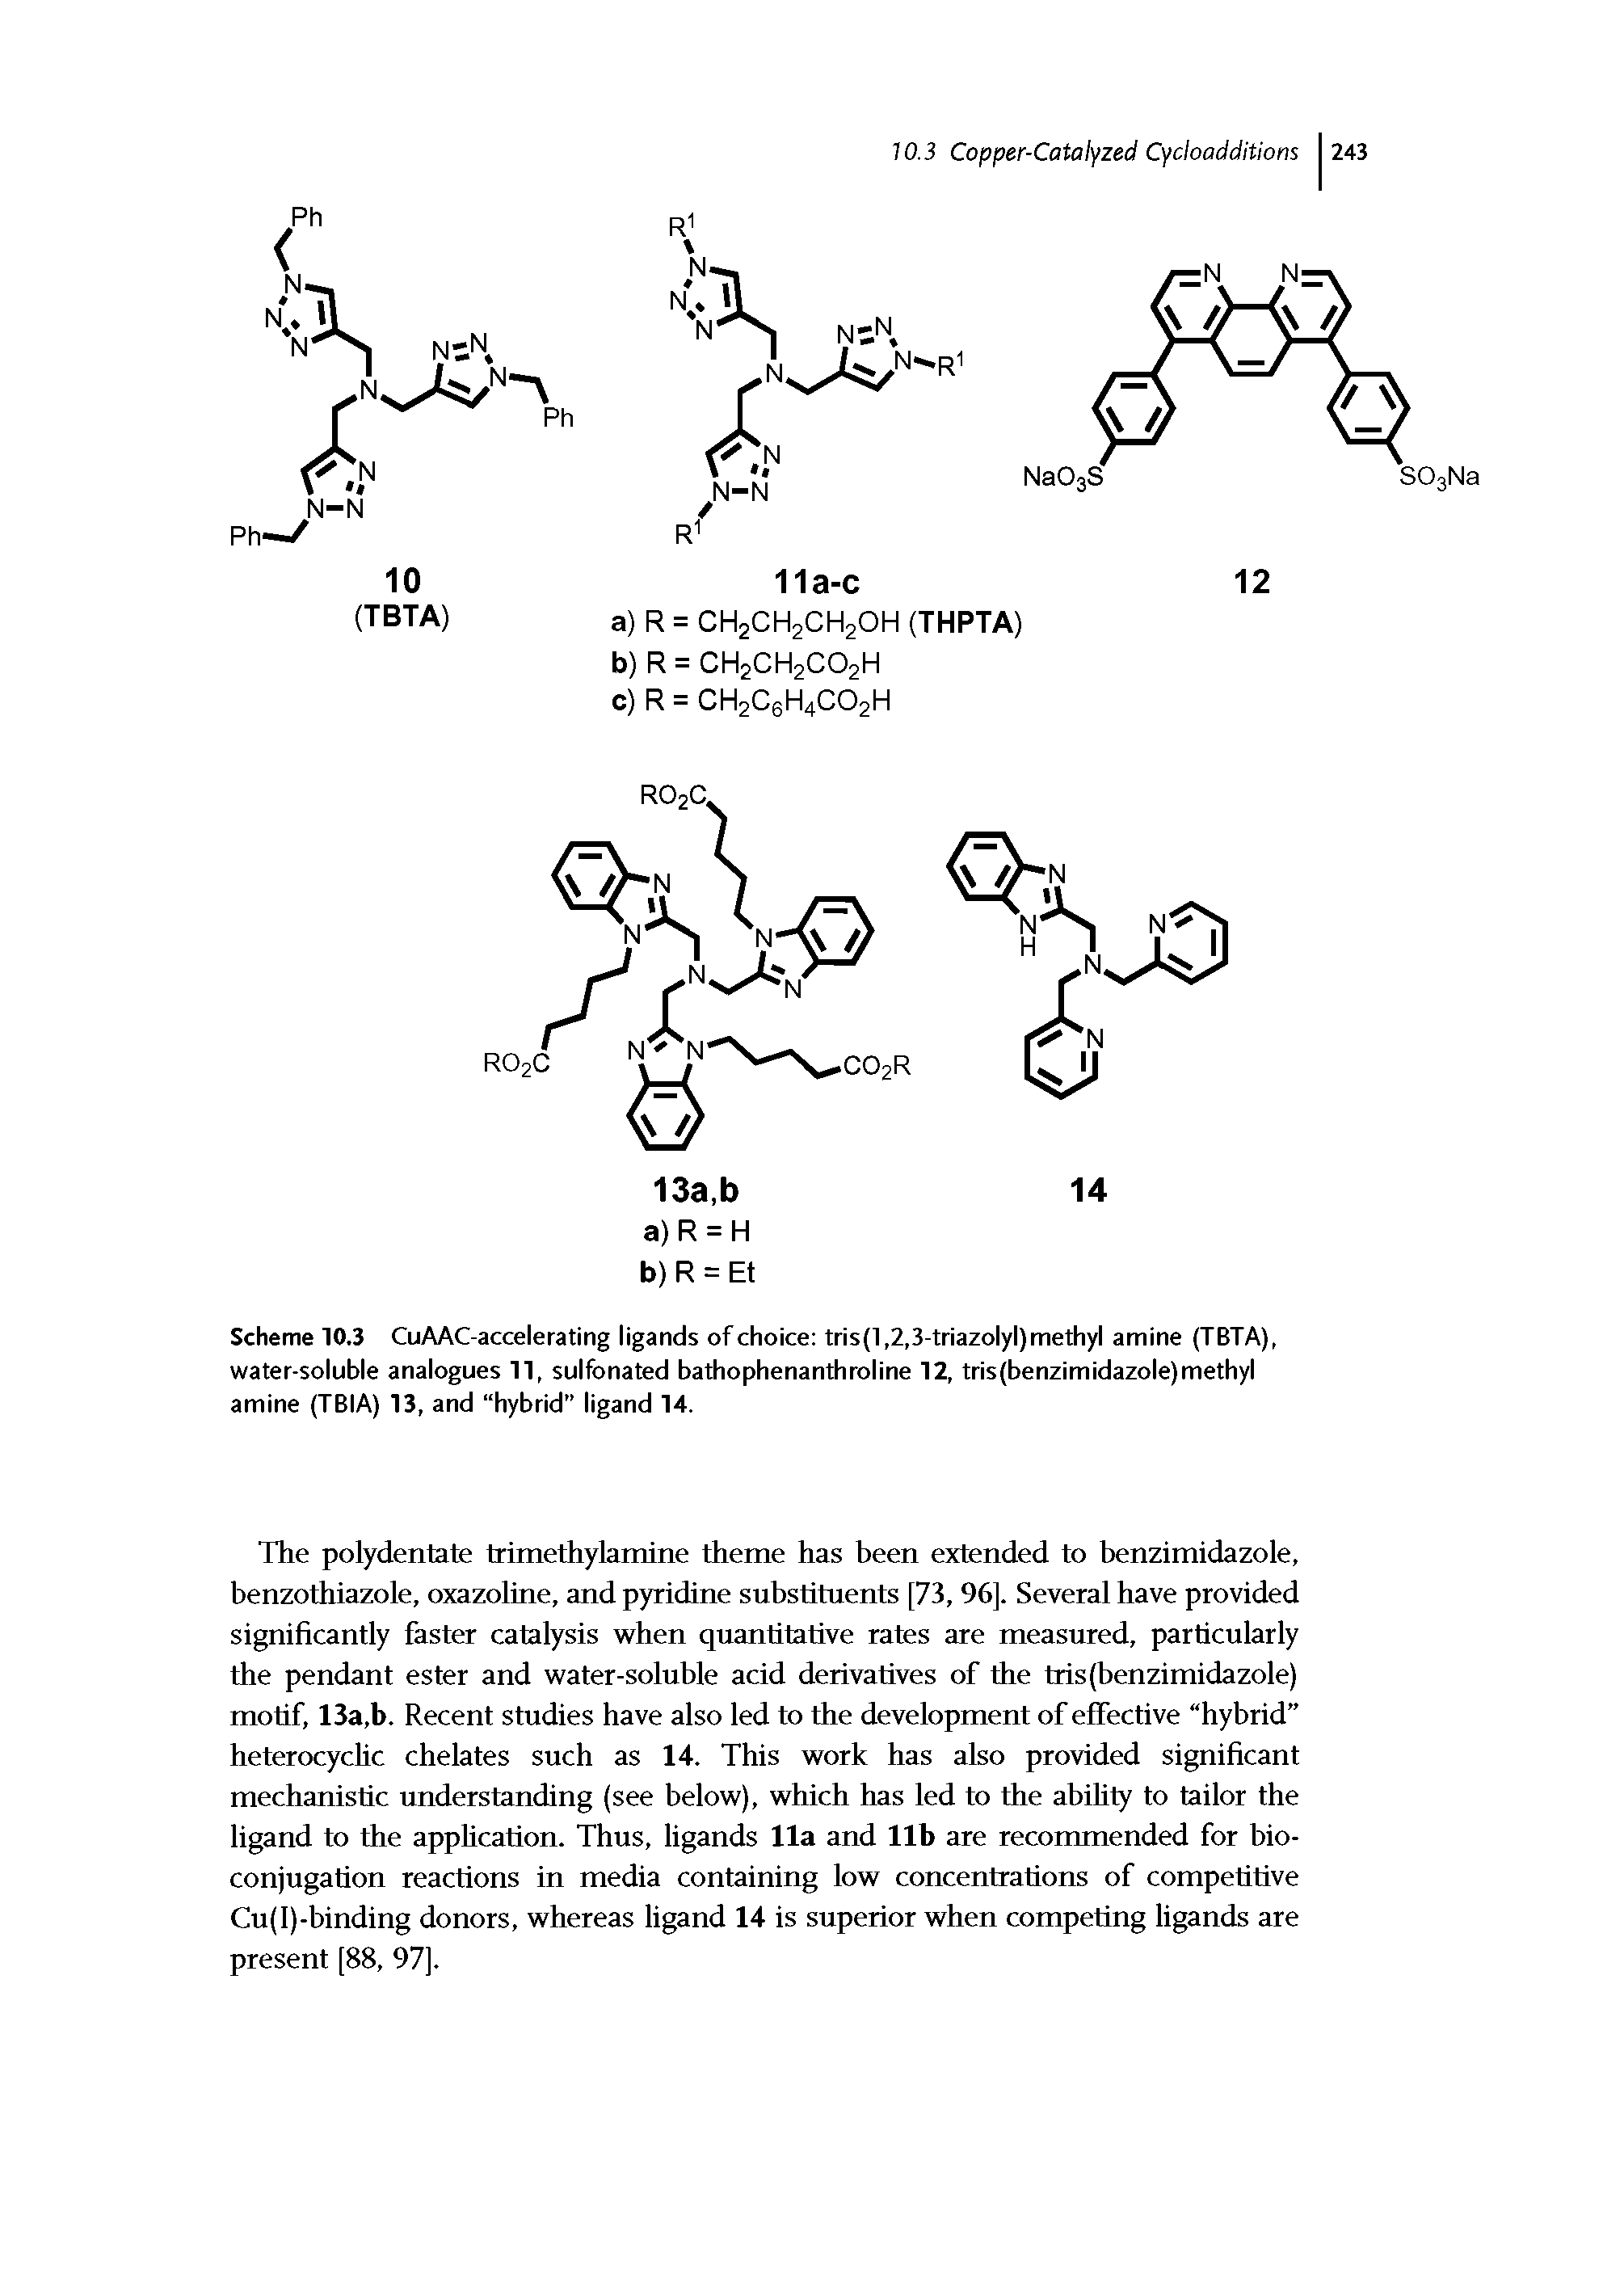 Scheme 10.3 CuAAC-accelerating ligands of choice tris(l,2,3-triazolyl)methyl amine (TBTA), water-soluble analogues 11, sulfonated bathophenanthroline 12, tris(benzimidazole)methyl amine (TBiA) 13, and hybrid ligand 14.